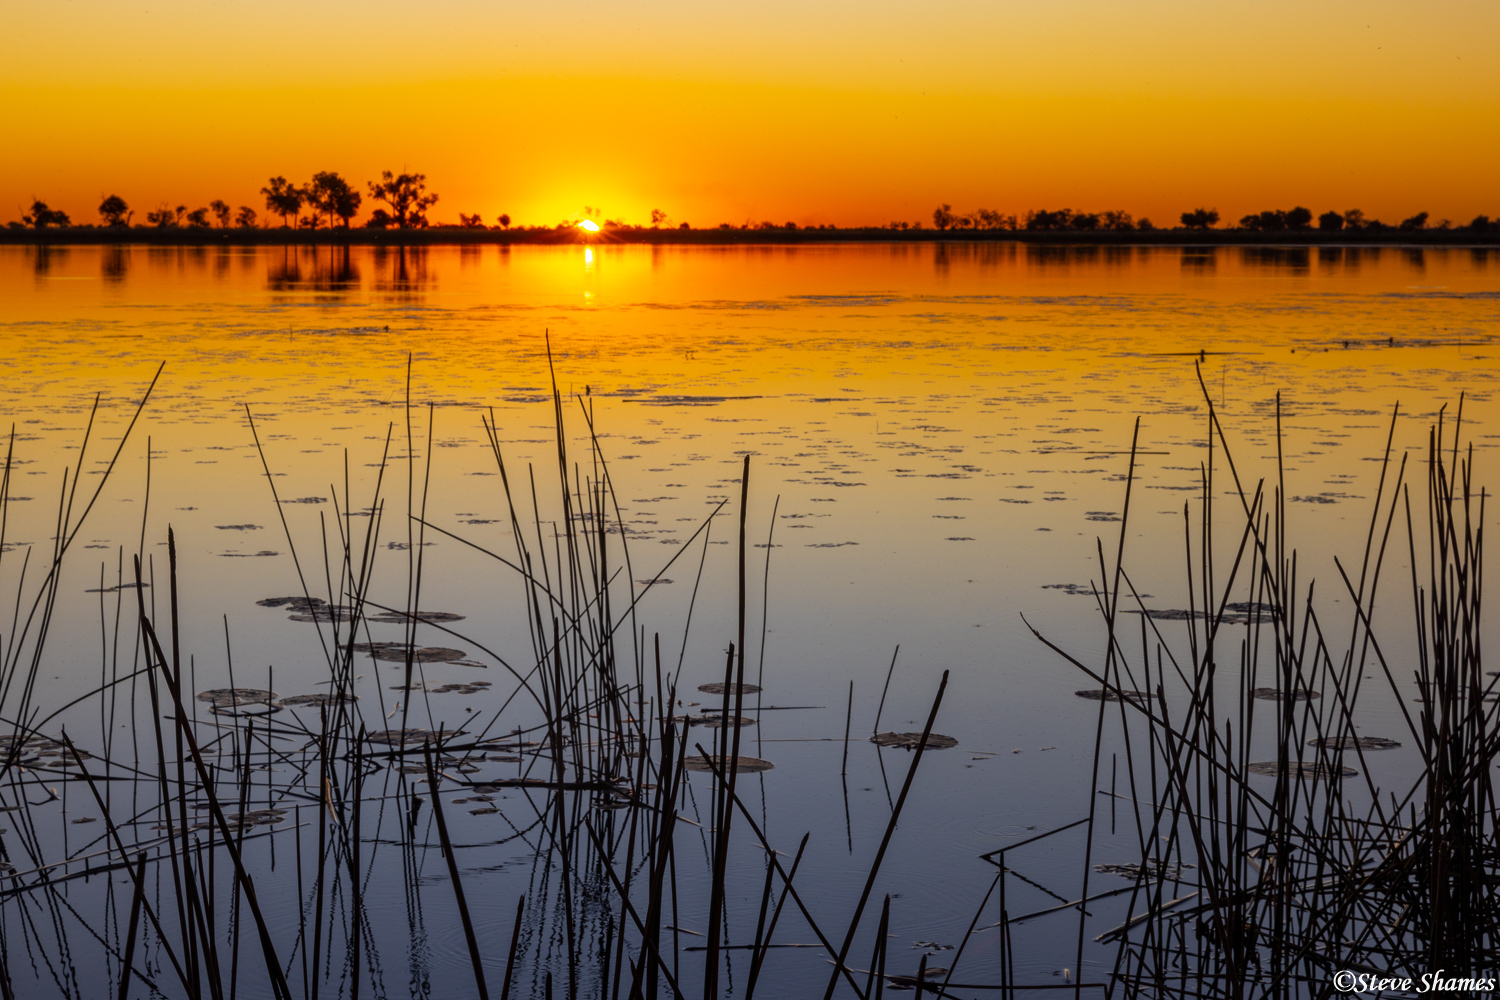 A great sunset in the Okavango Delta in Botswana.